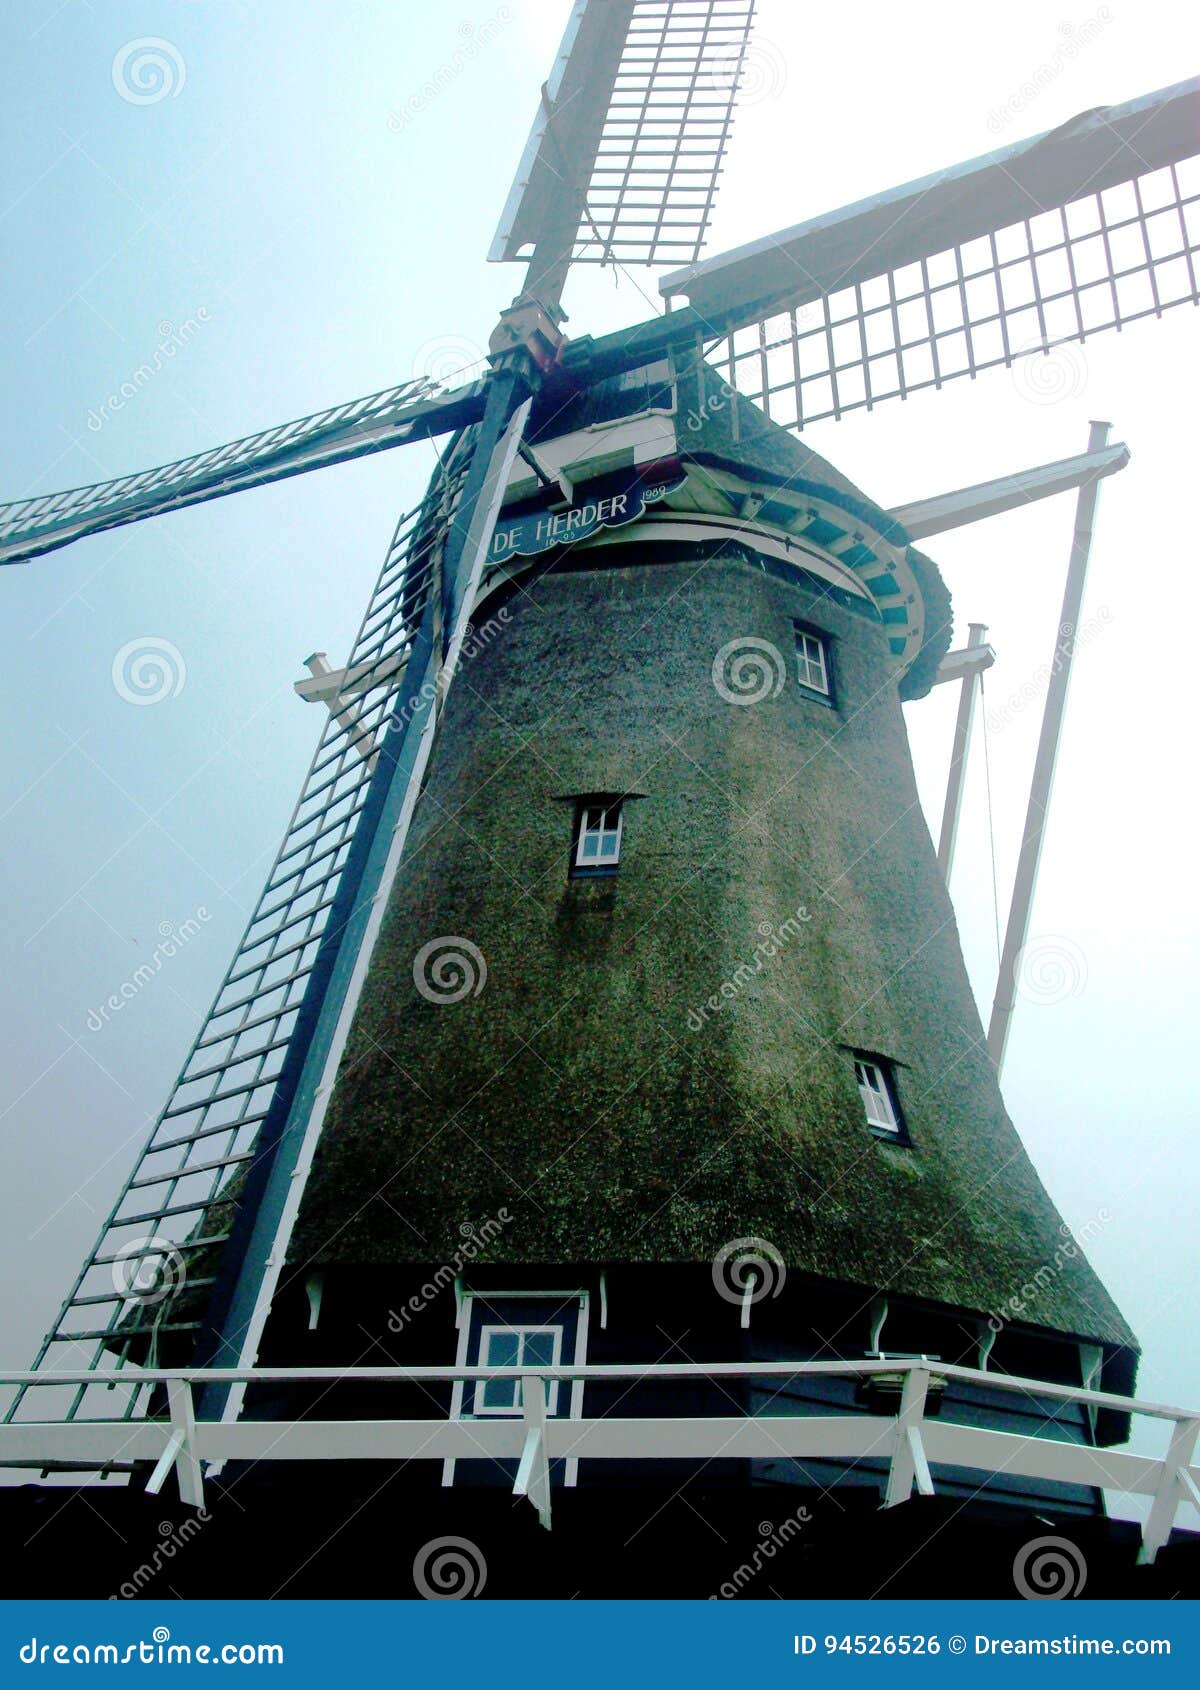 Windmill De Herder In Medemblik Holland The Netherlands Editorial Photo Image Of Artistic 